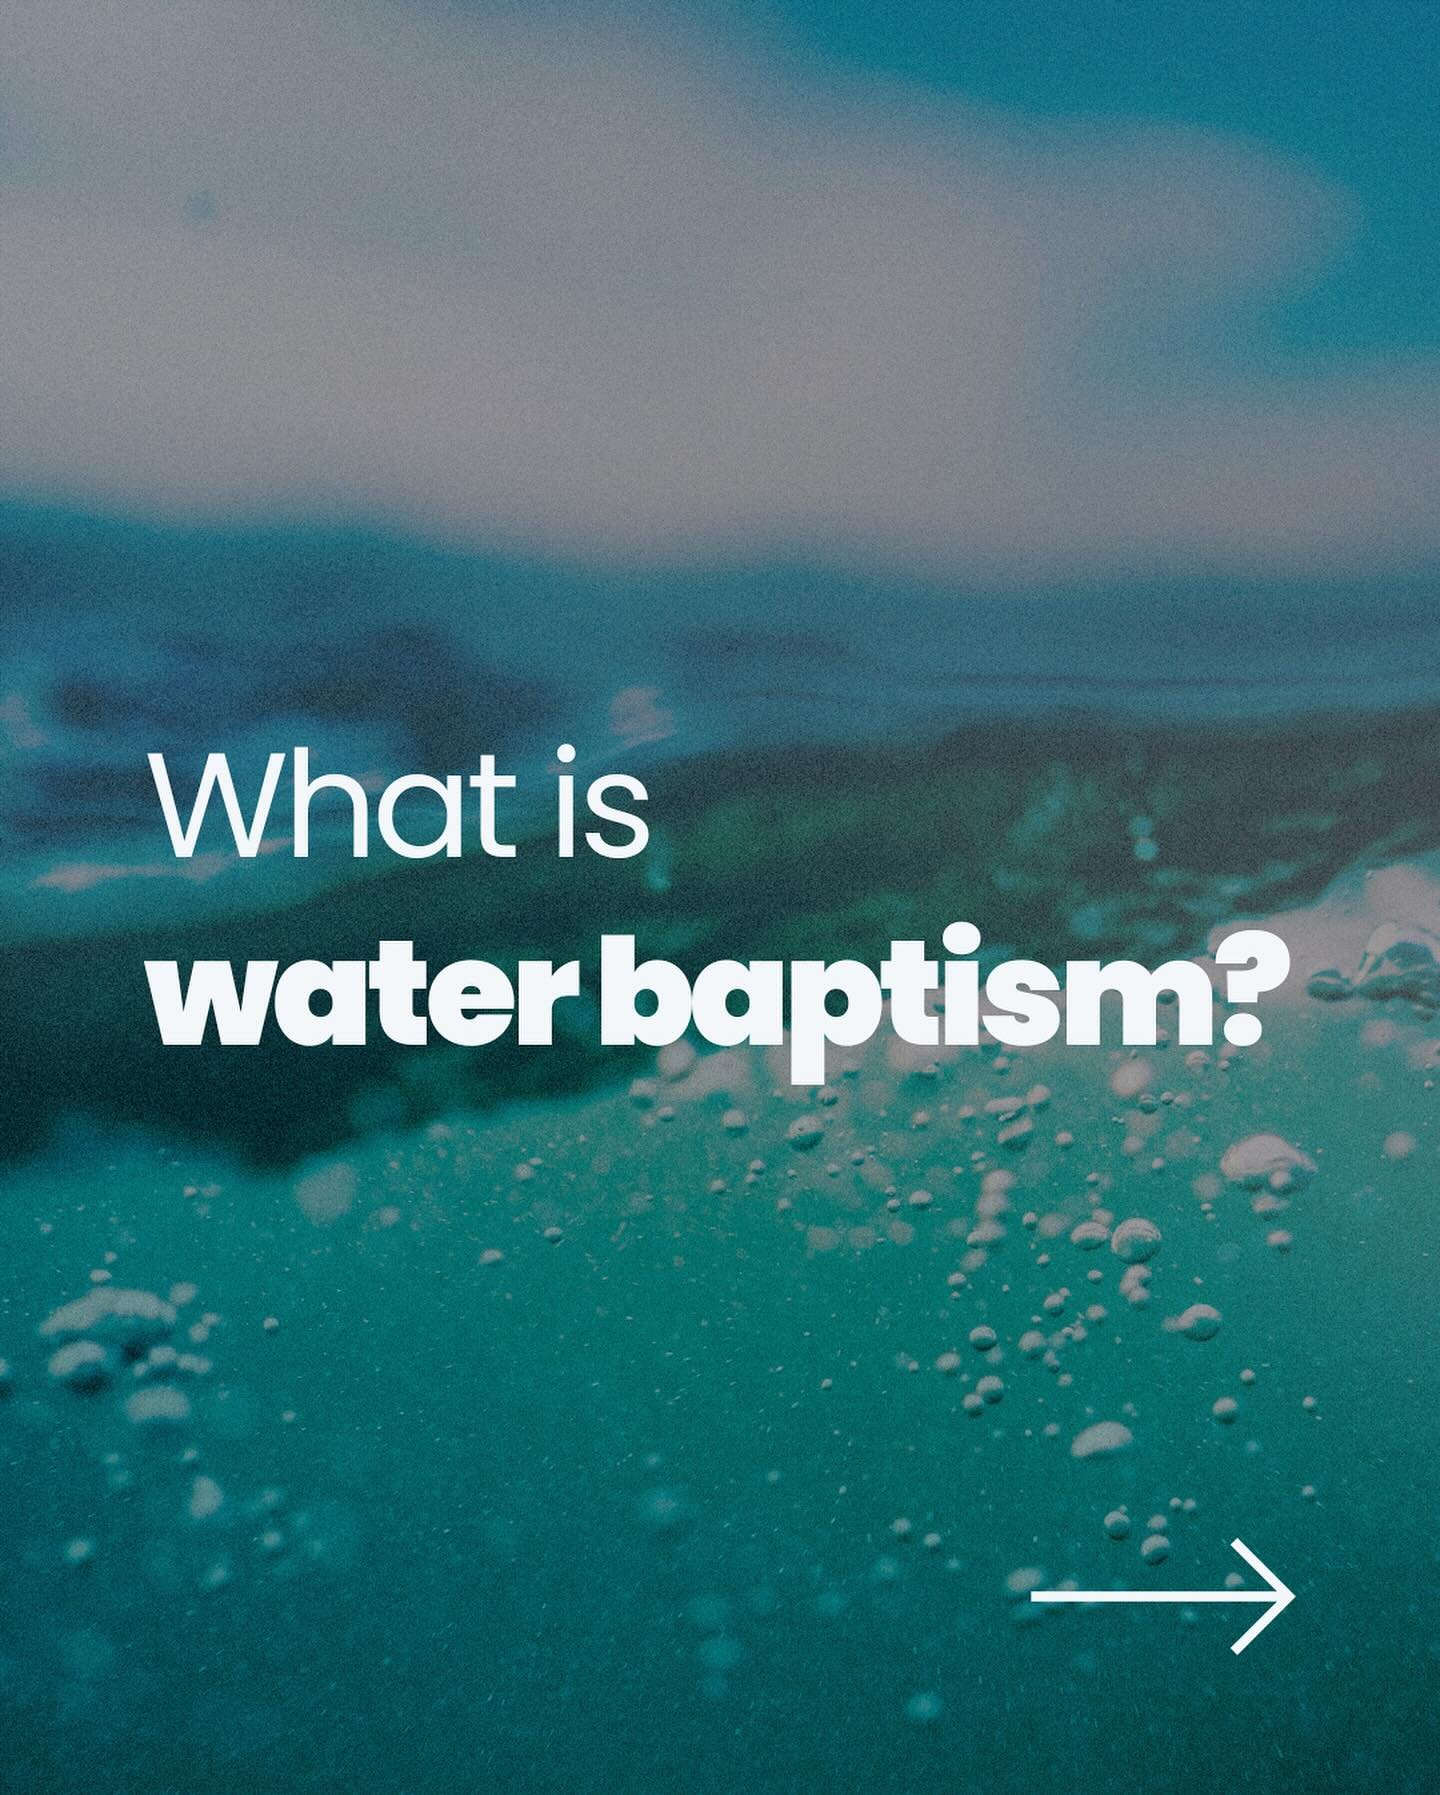 Some insight on #Baptism ! Did you know? #WaterBaptism 

#Baptised #BaptismSunday #SundayService #NewCreation #NewMind #NewMindset #LivingWithJesus #JesusChrist #Saviour #JesusSaves